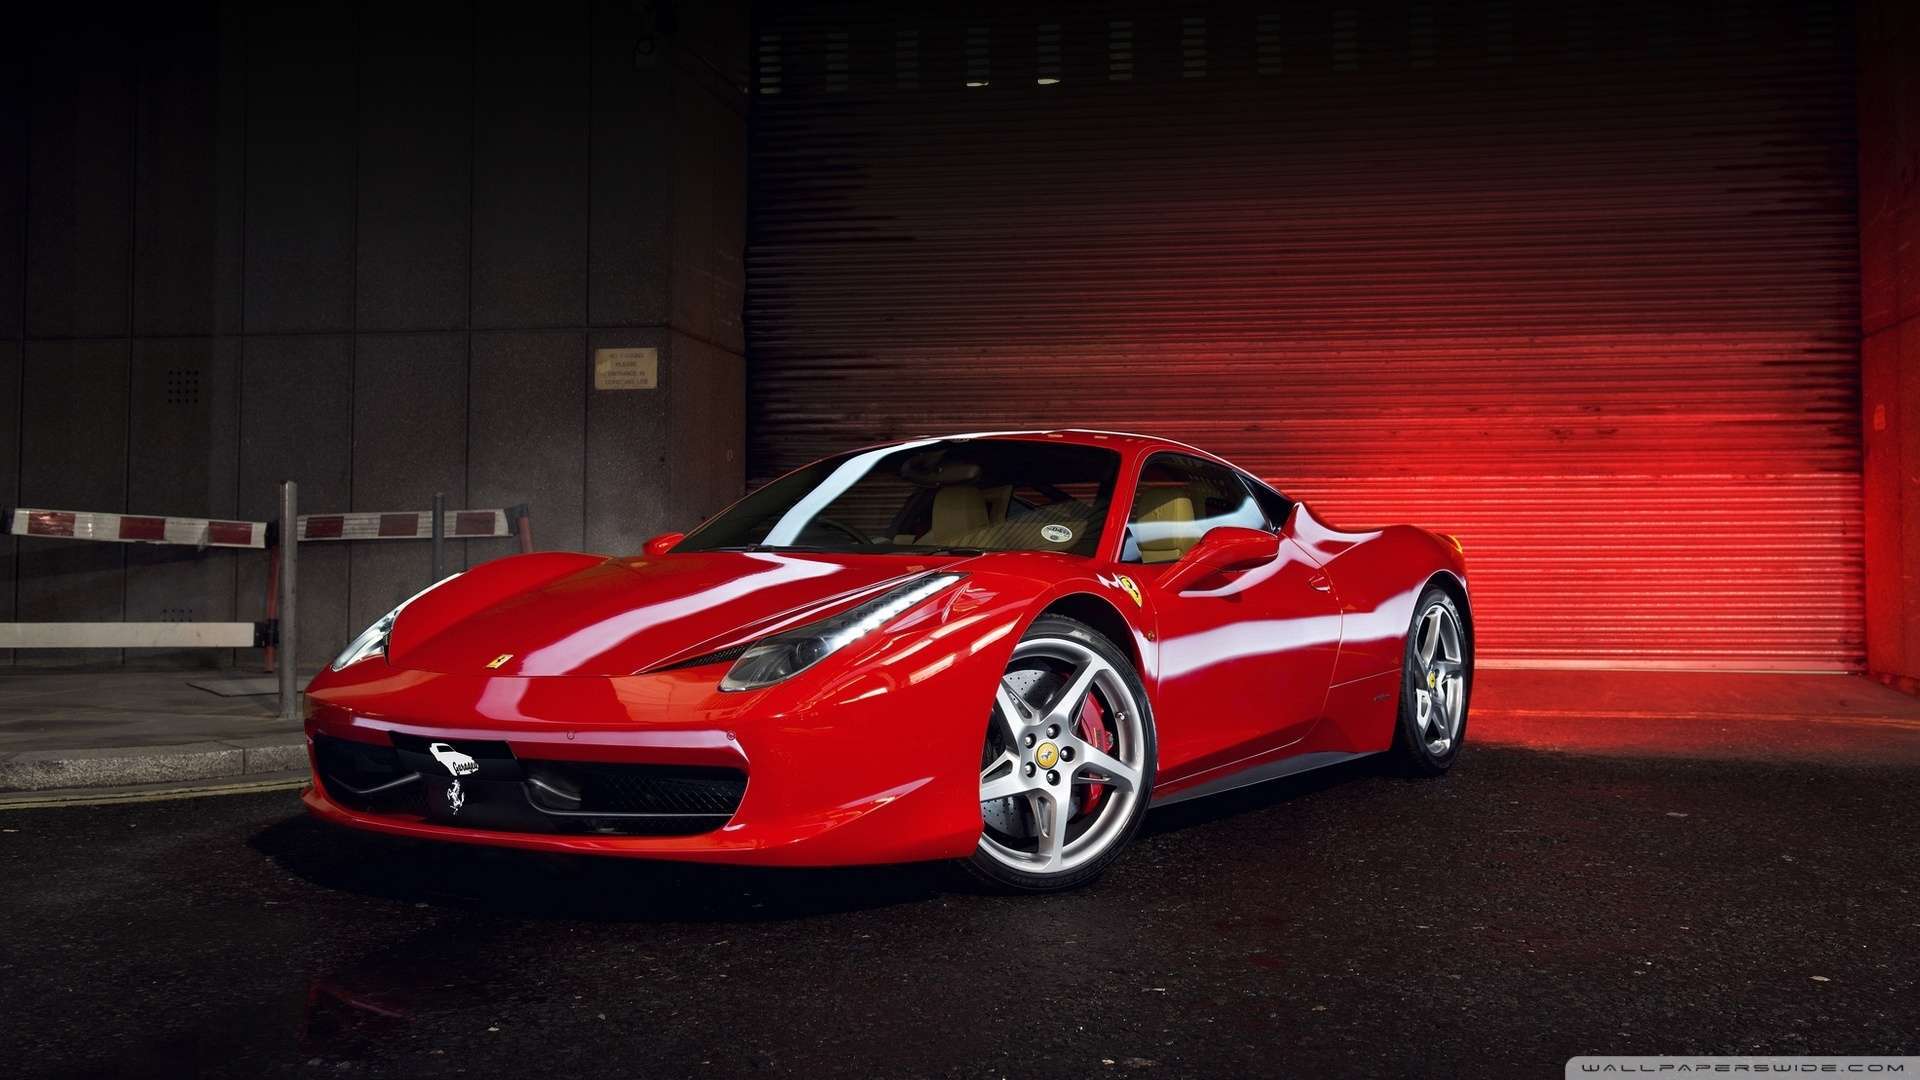 Ferrari Wallpaper Hd 1080p - image #422